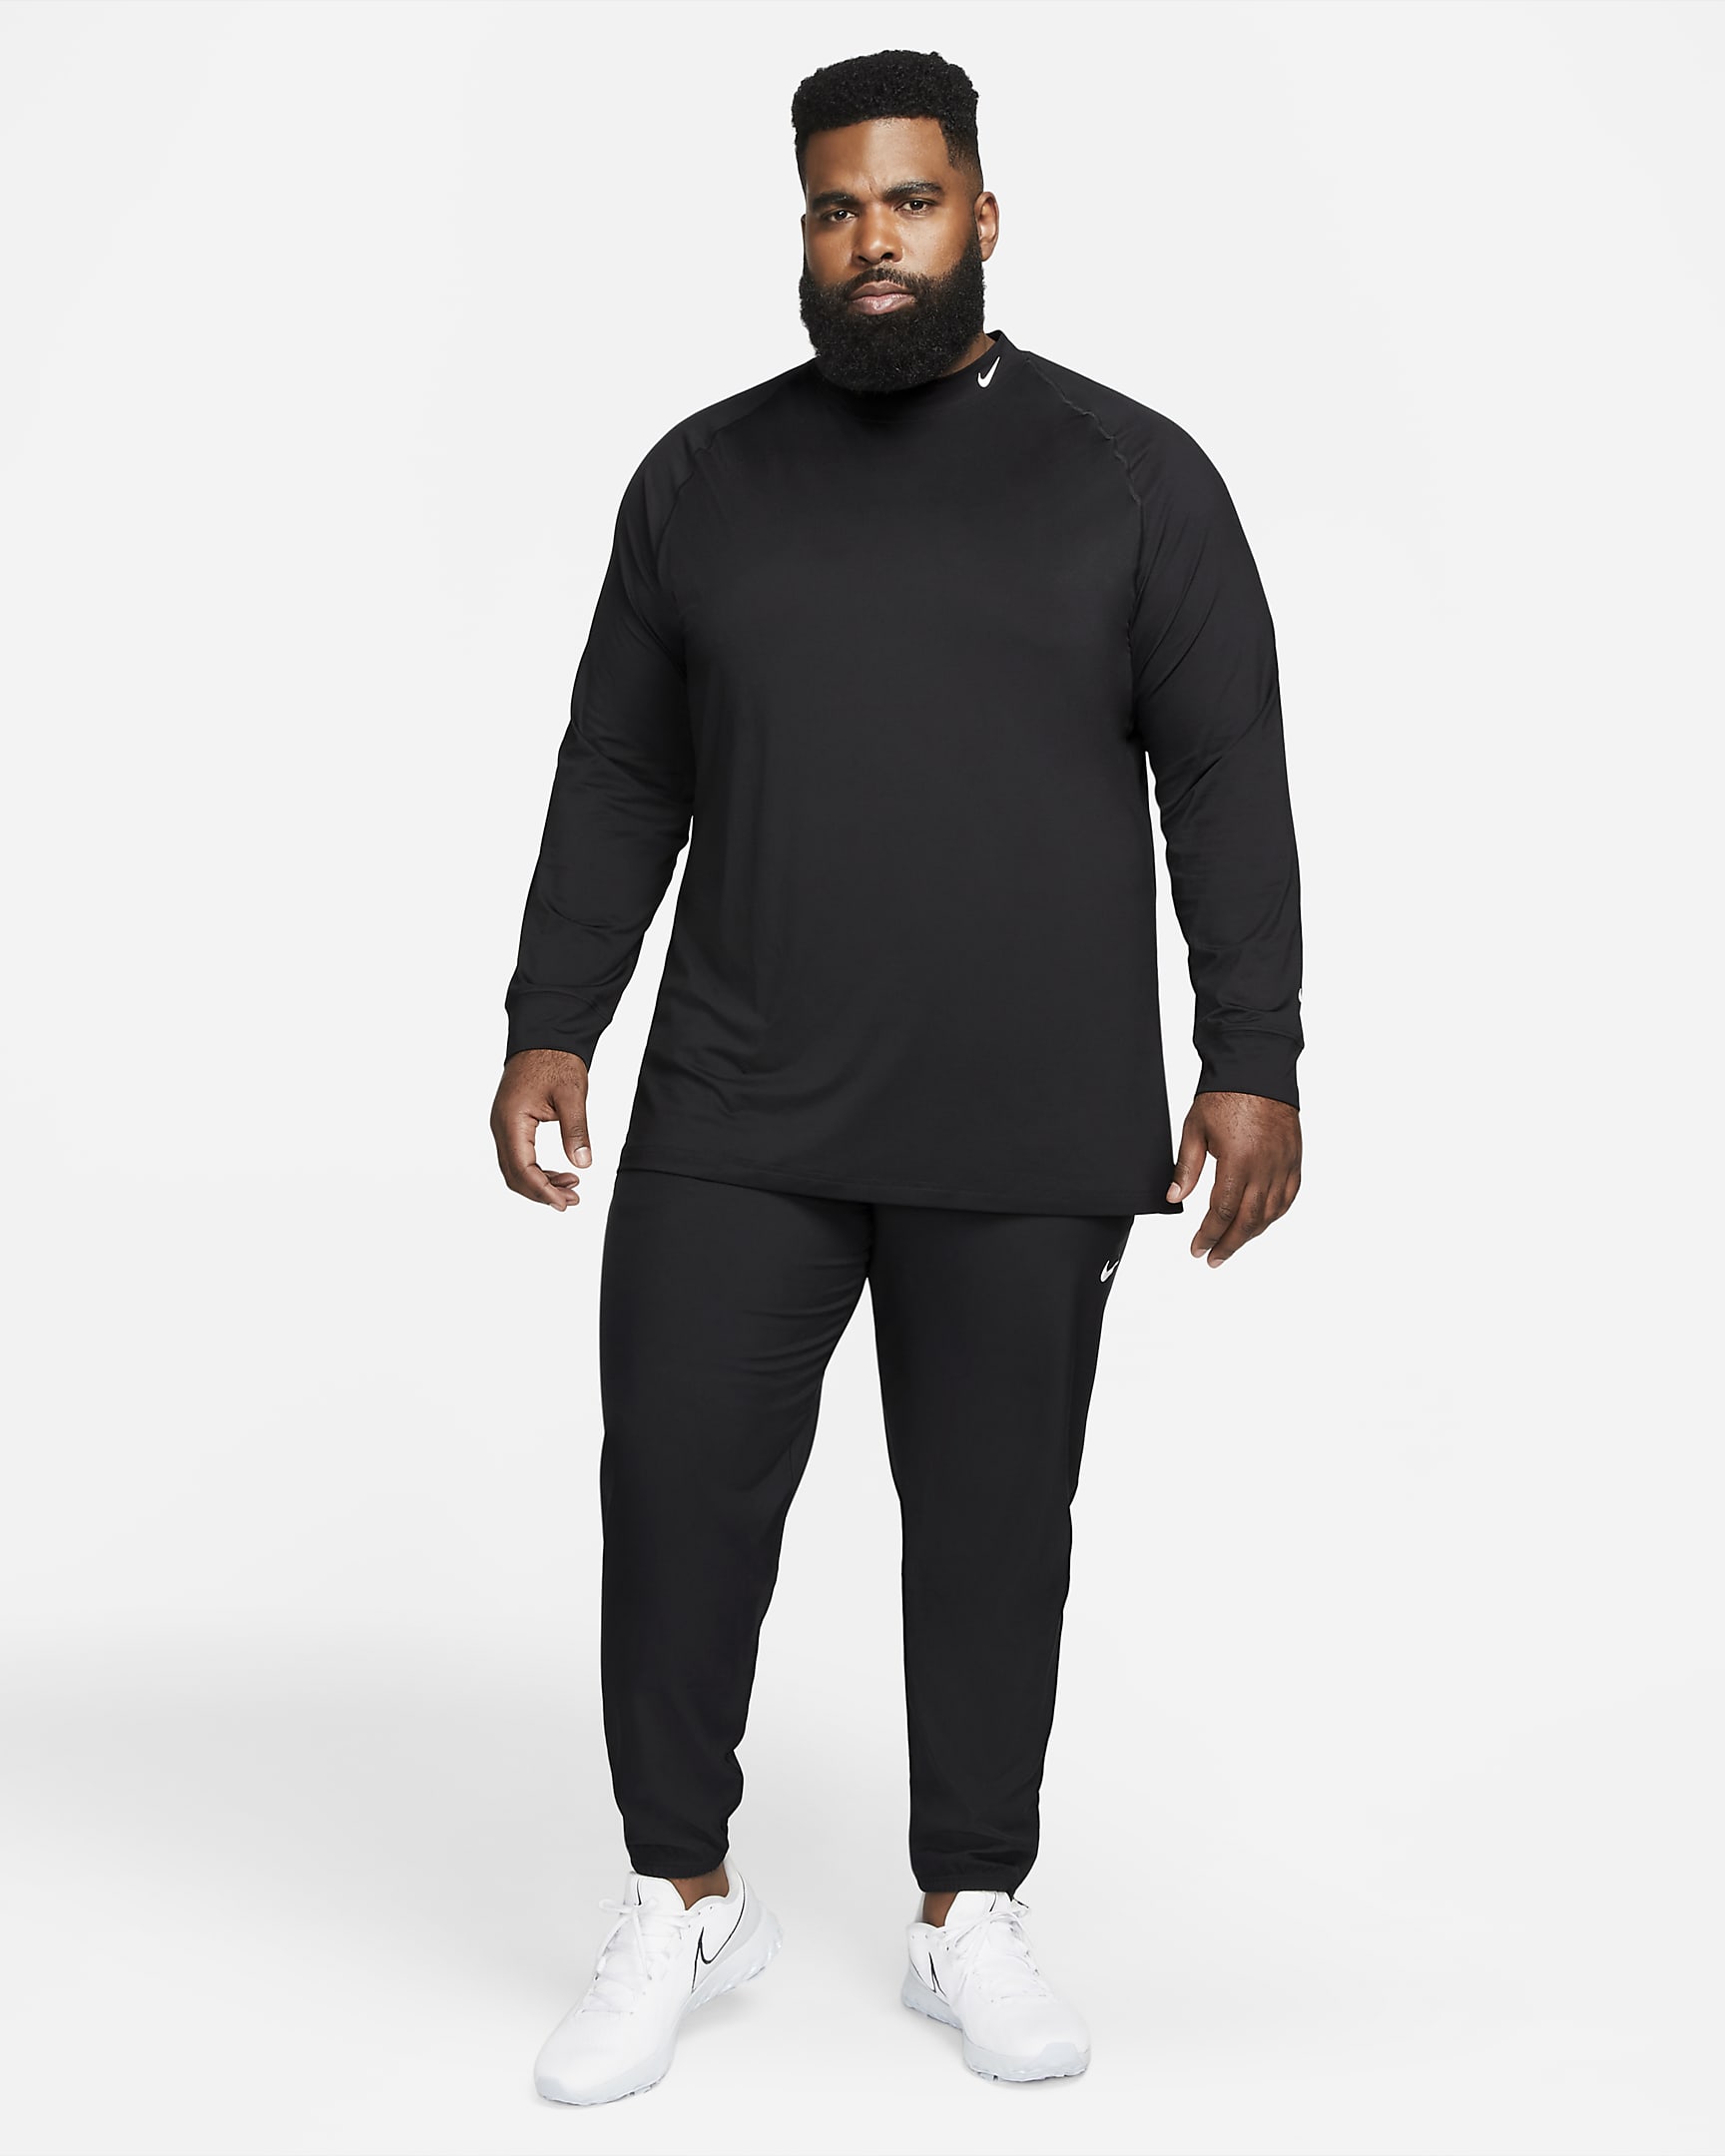 Nike Dri-FIT UV Vapor Men's Long-Sleeve Golf Top. Nike CA